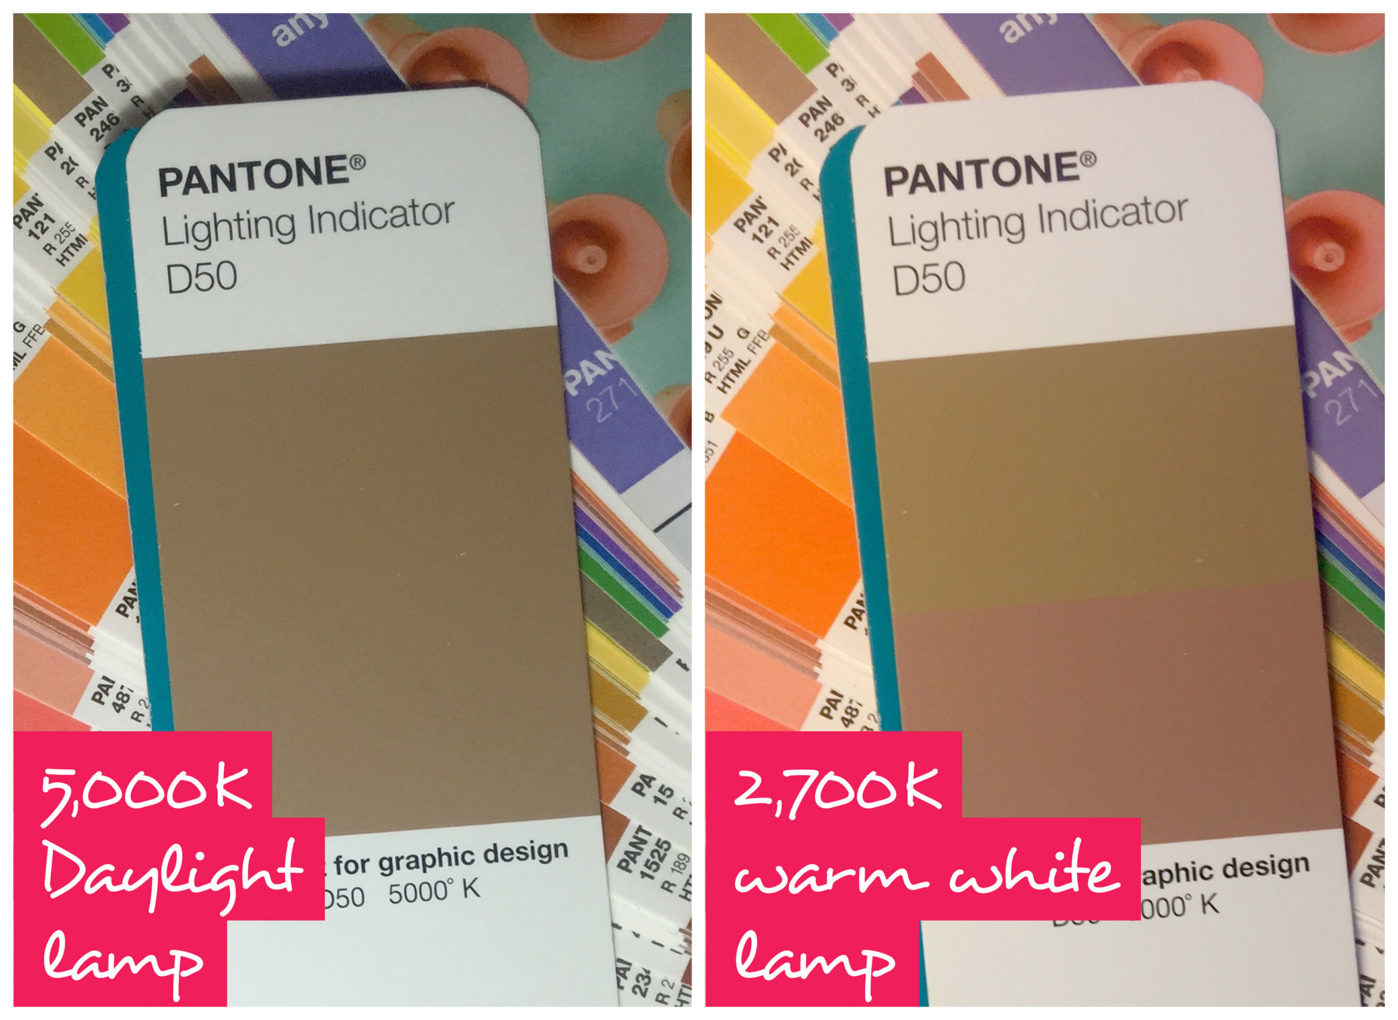 Pantone D50 light indicator under both daylight and warm light conditions